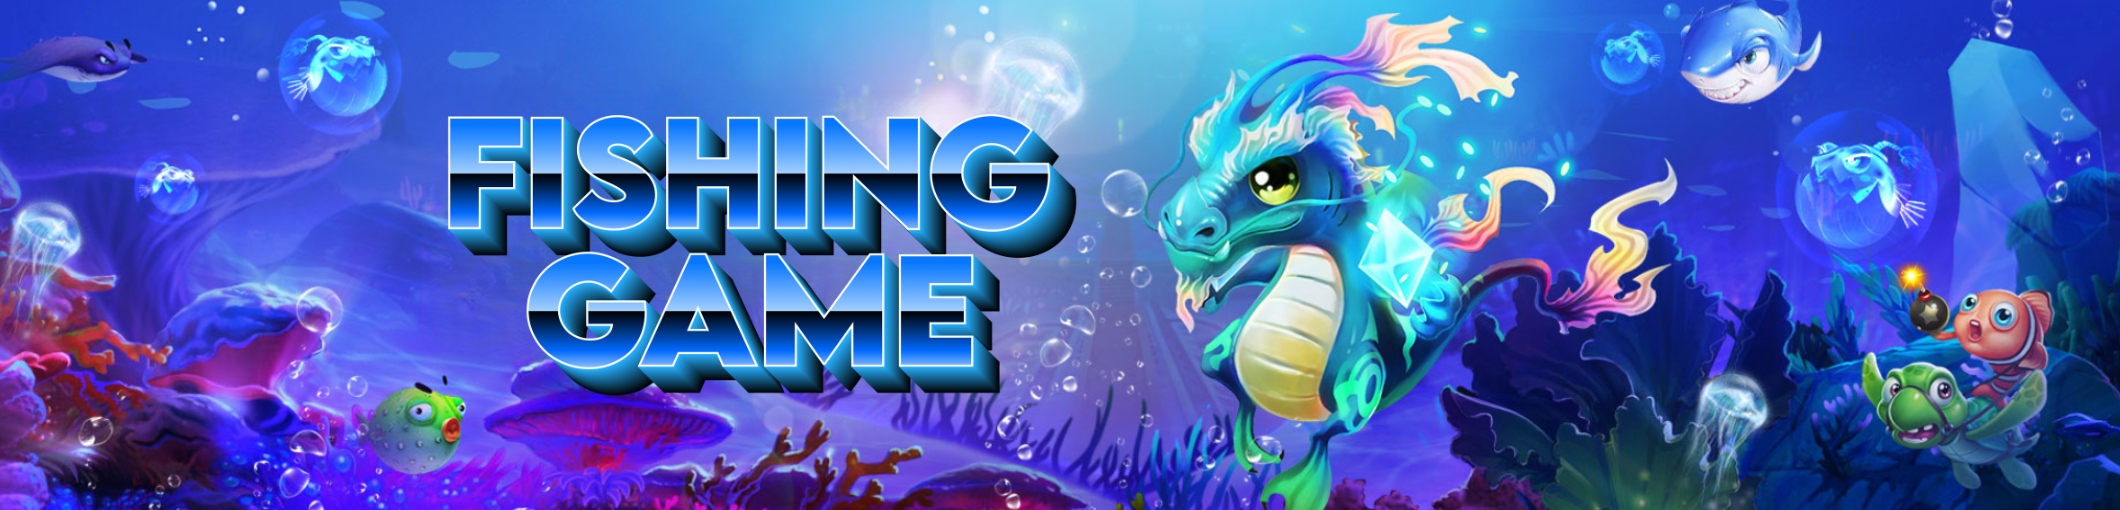 Fishing Games Banner